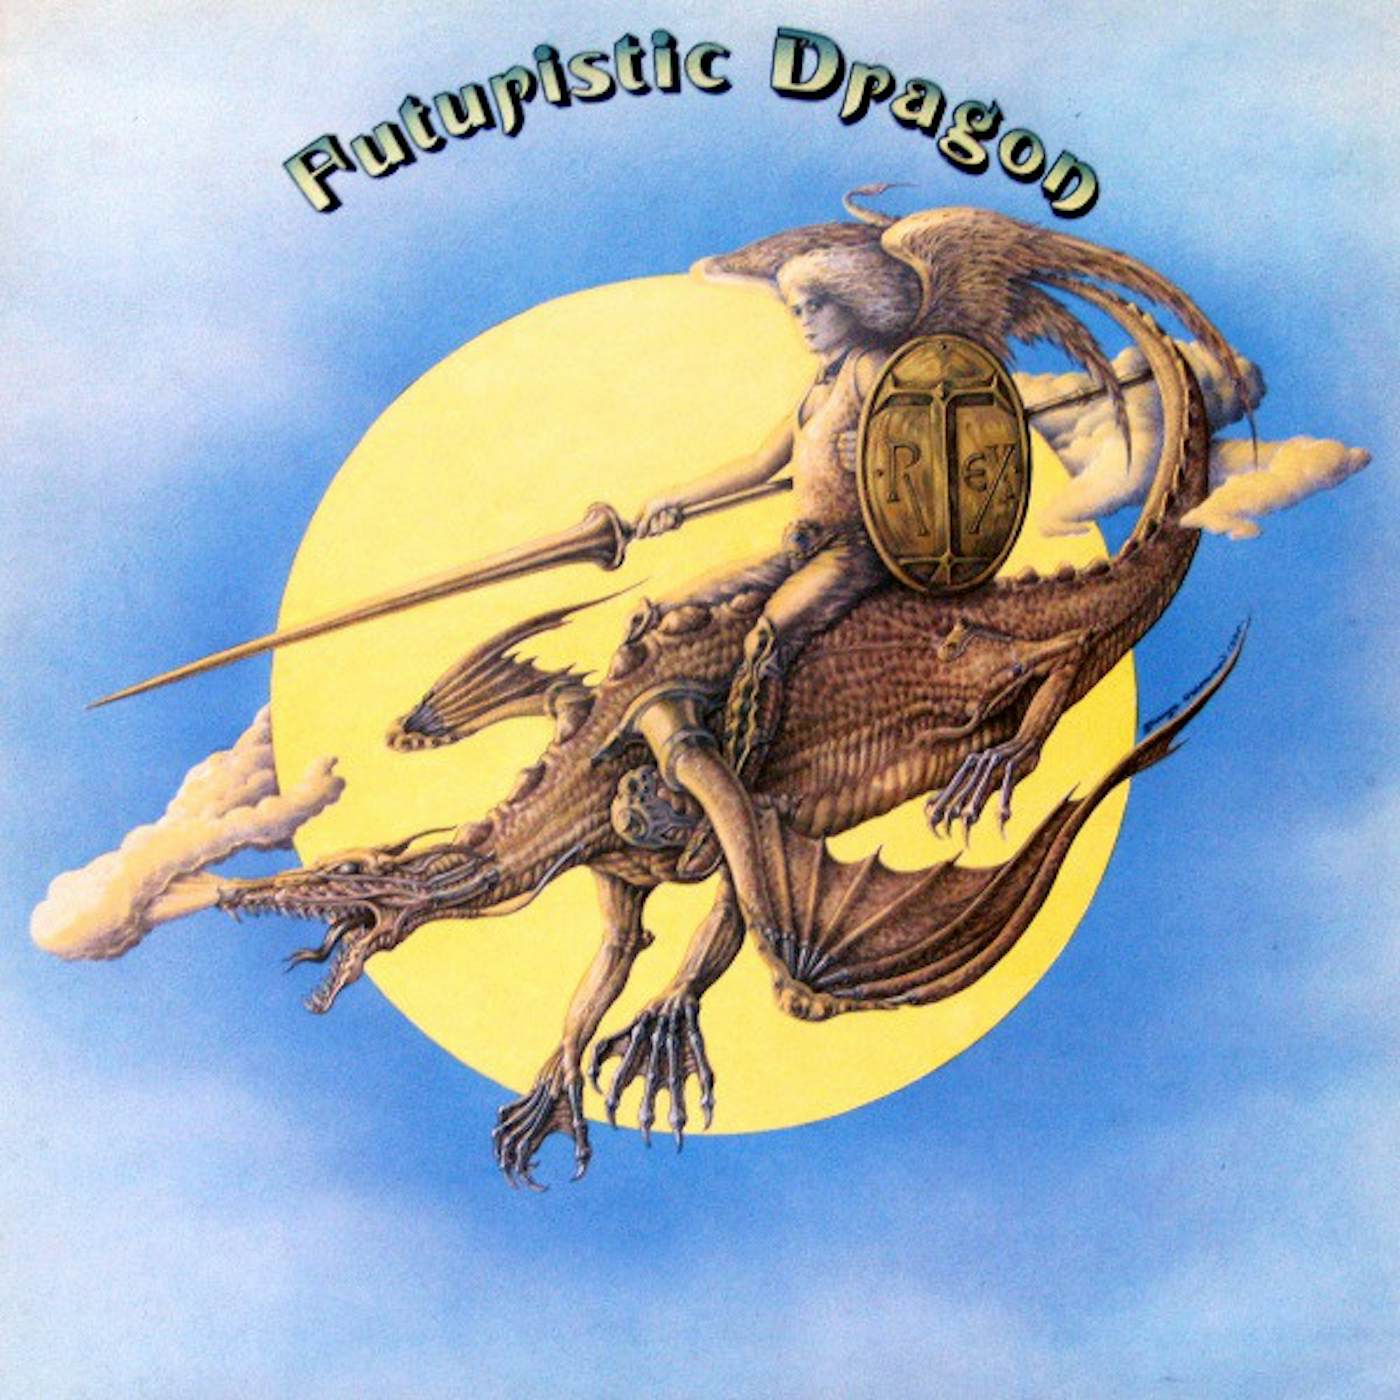 T. Rex Futuristic Dragon Vinyl Record